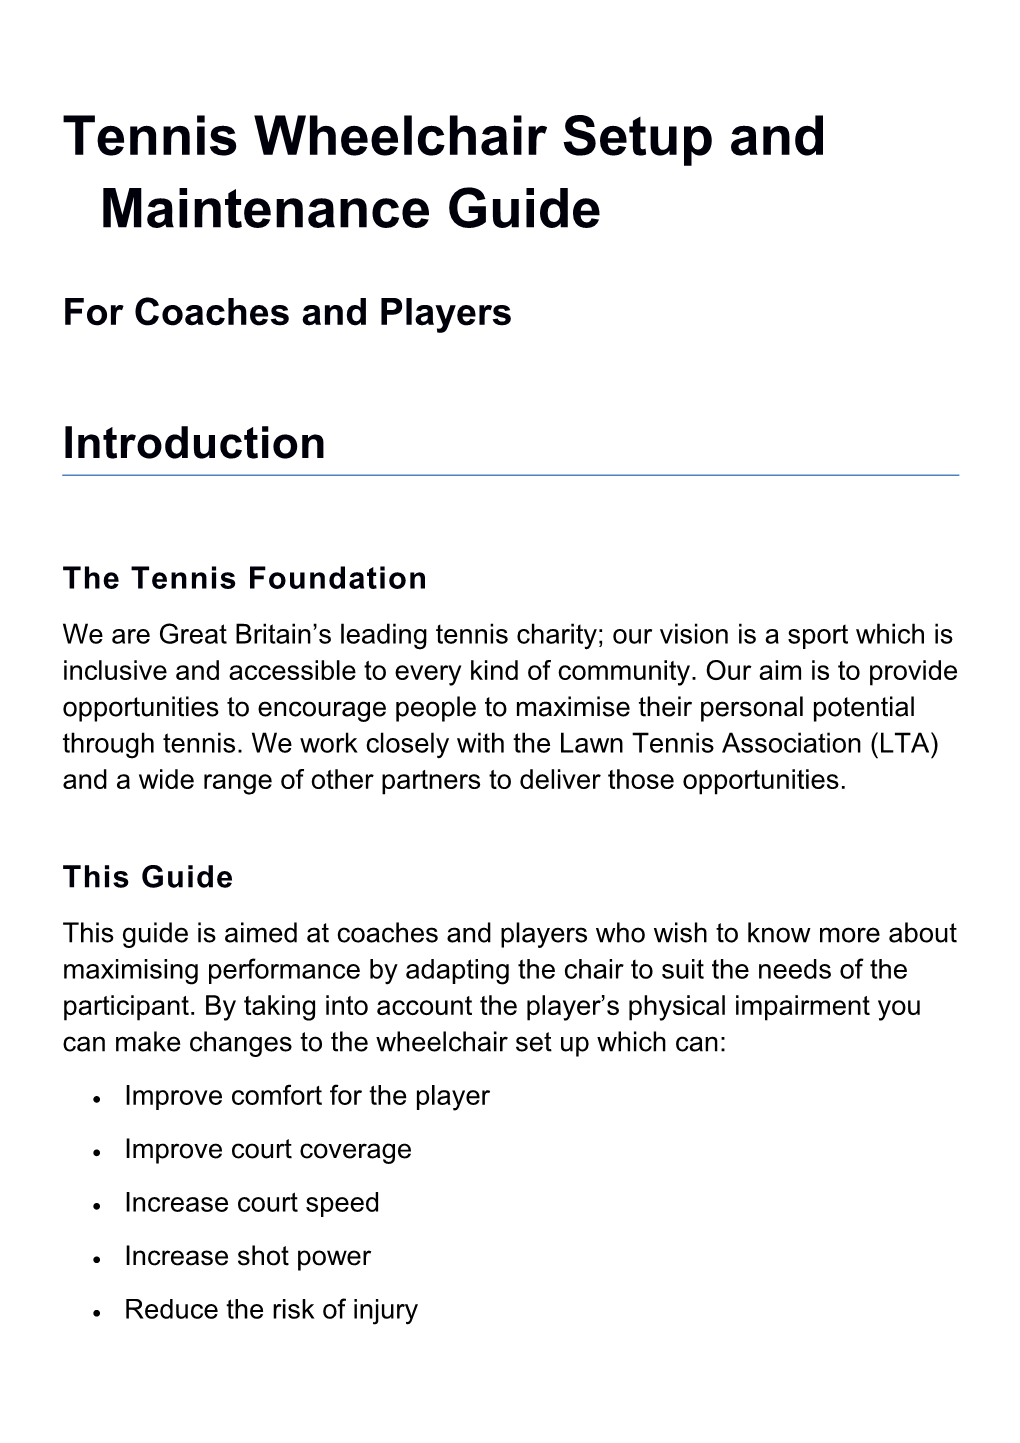 Tennis Wheelchair Setup and Maintenance Guide